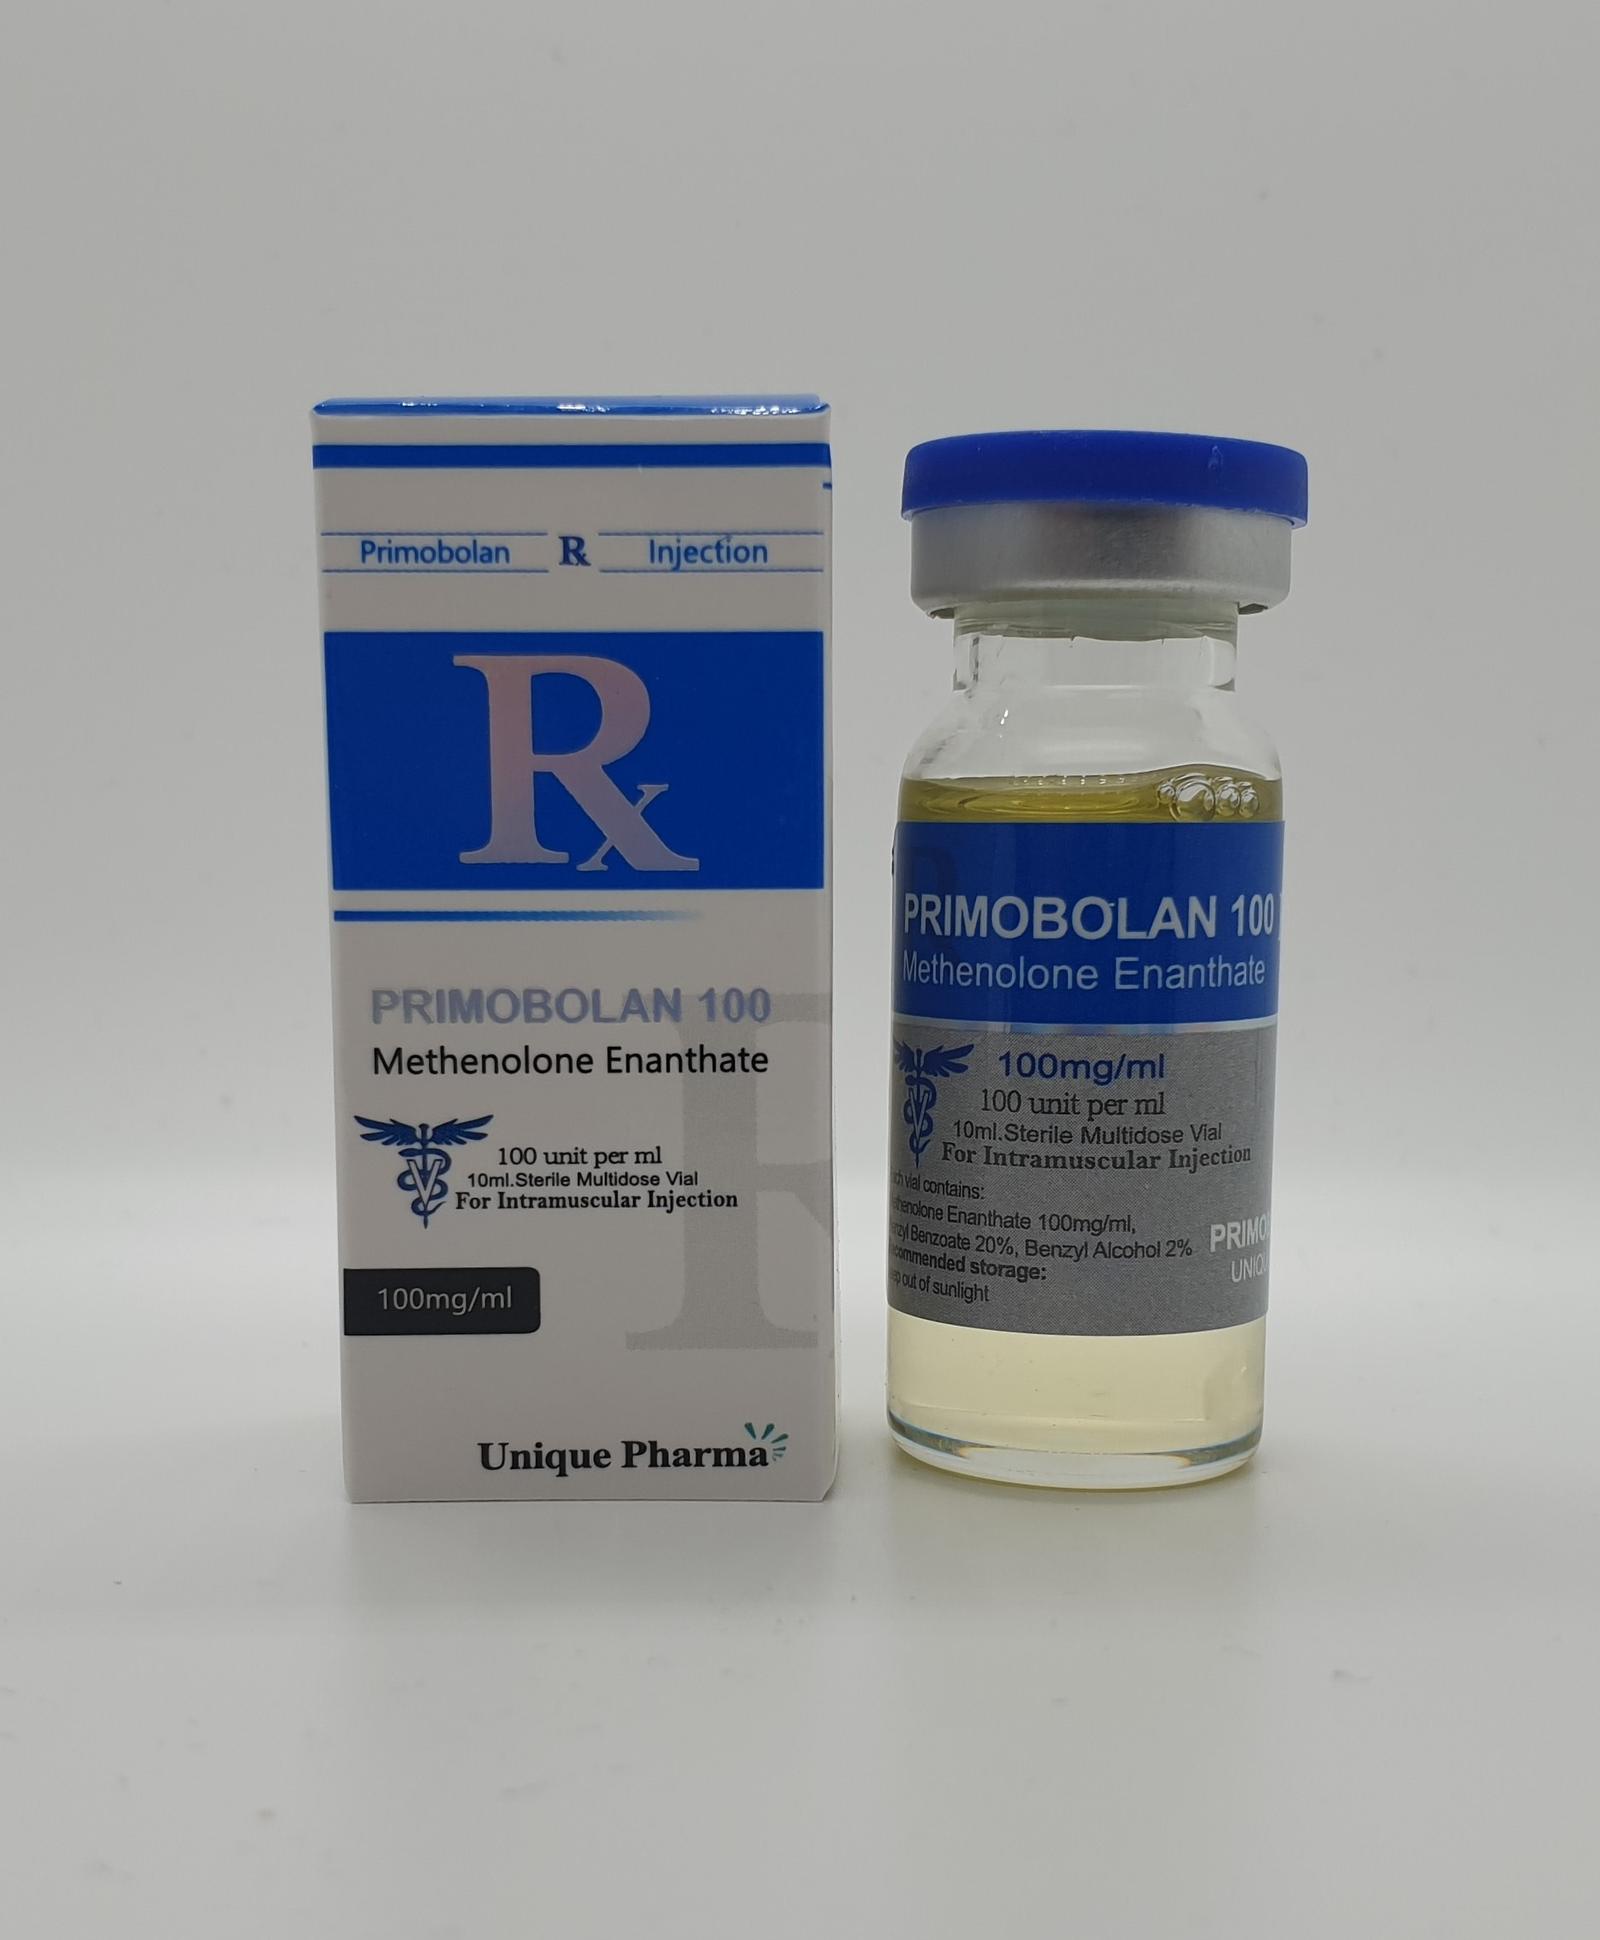 Primobolan 100 kopen (Methenolone Enanthate) by UNIQUE PHARMA®